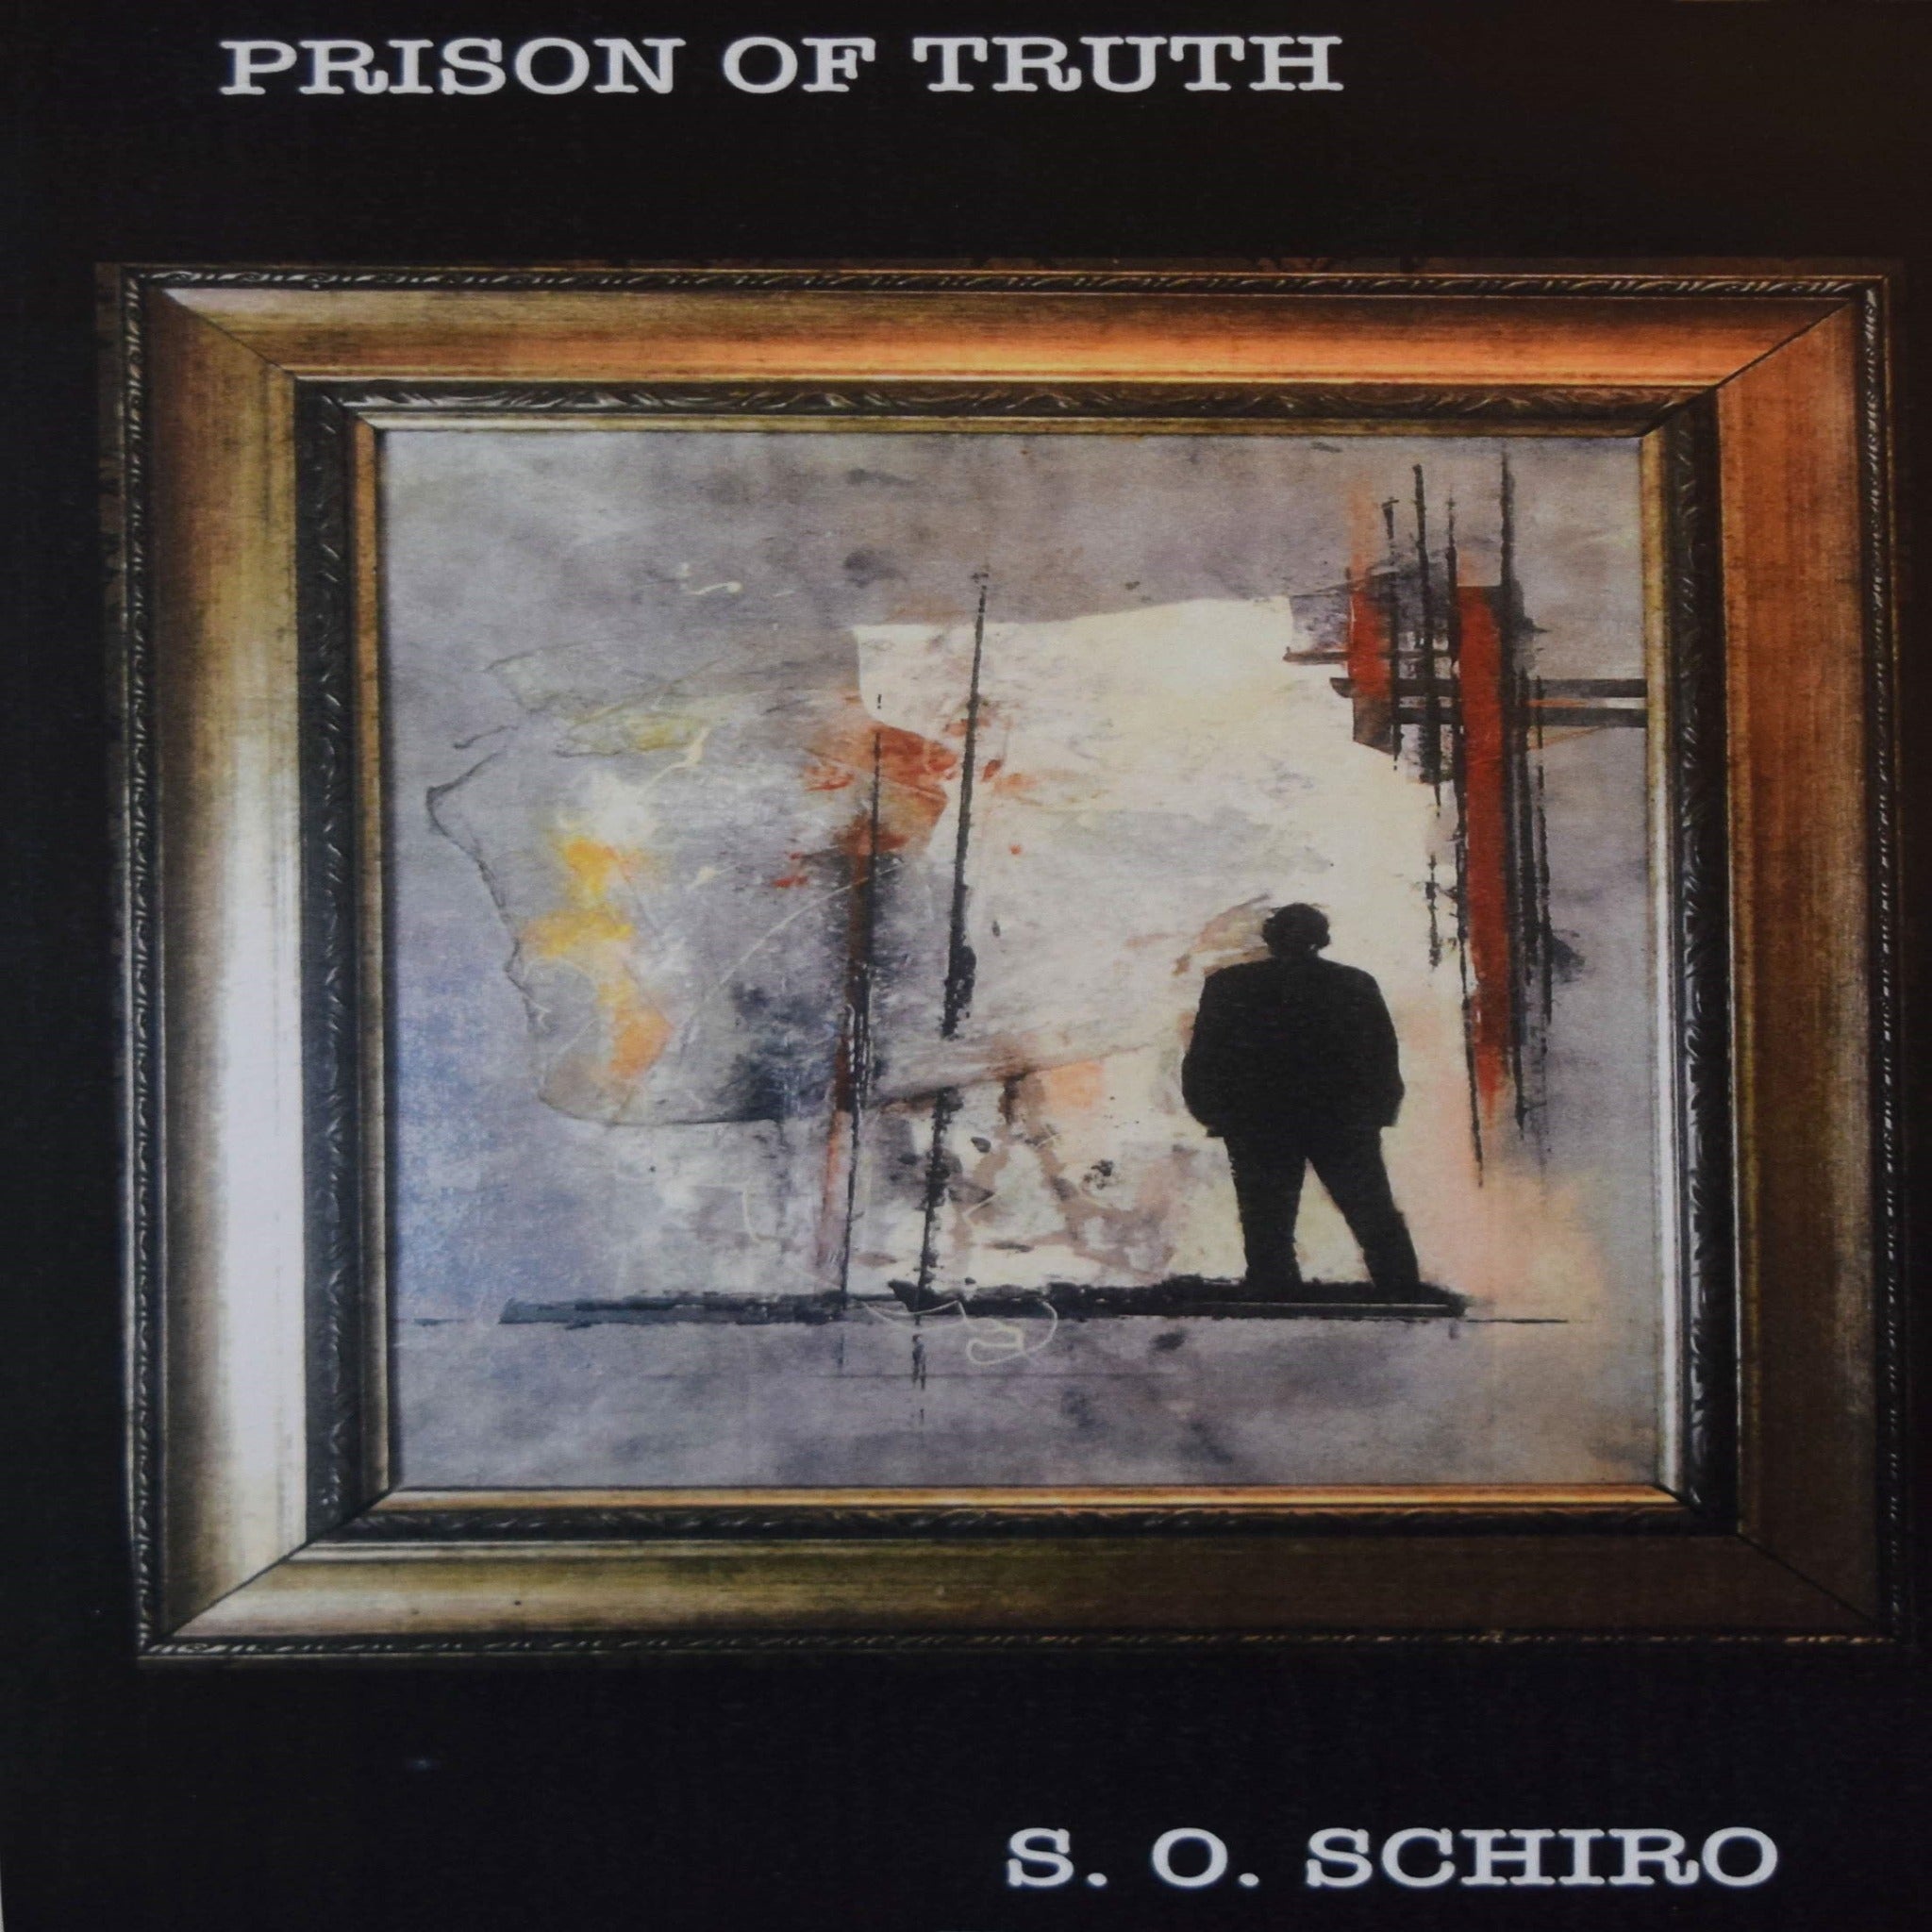 Prison of Truth by S. O. Schiro